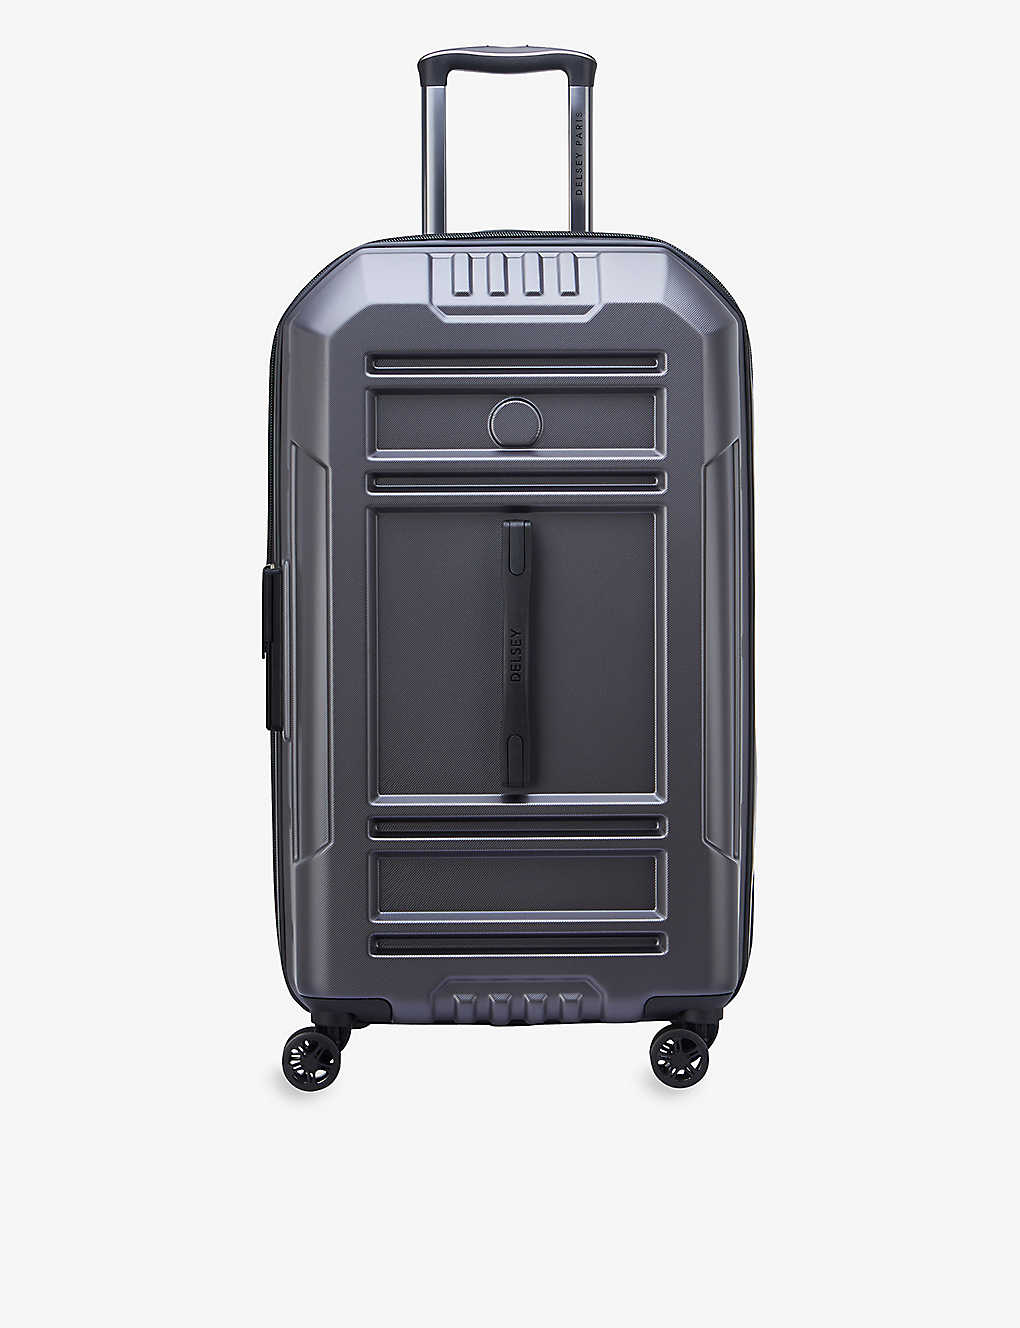 Delsey Anthracite Rempart Double-wheel Woven Suitcase 73cm